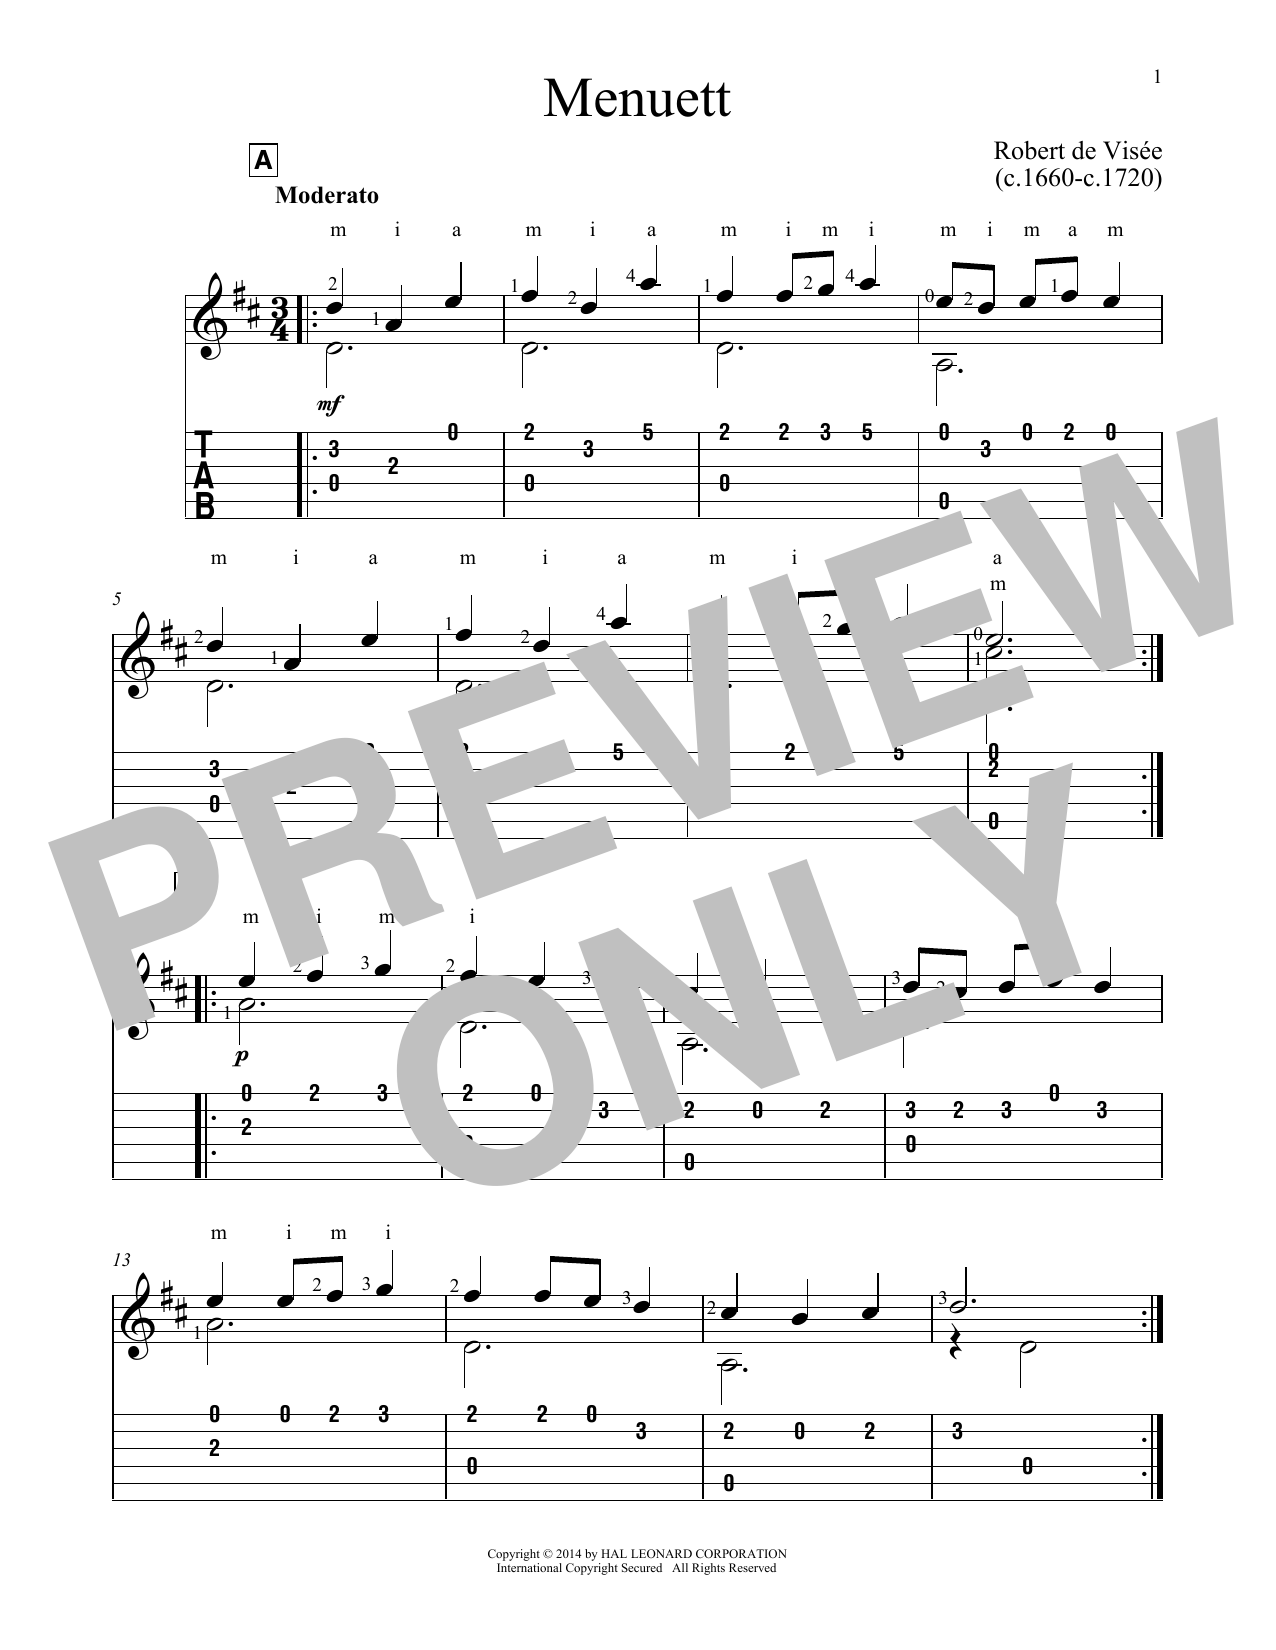 Download Robert de Visee Menuett Sheet Music and learn how to play Guitar Tab PDF digital score in minutes